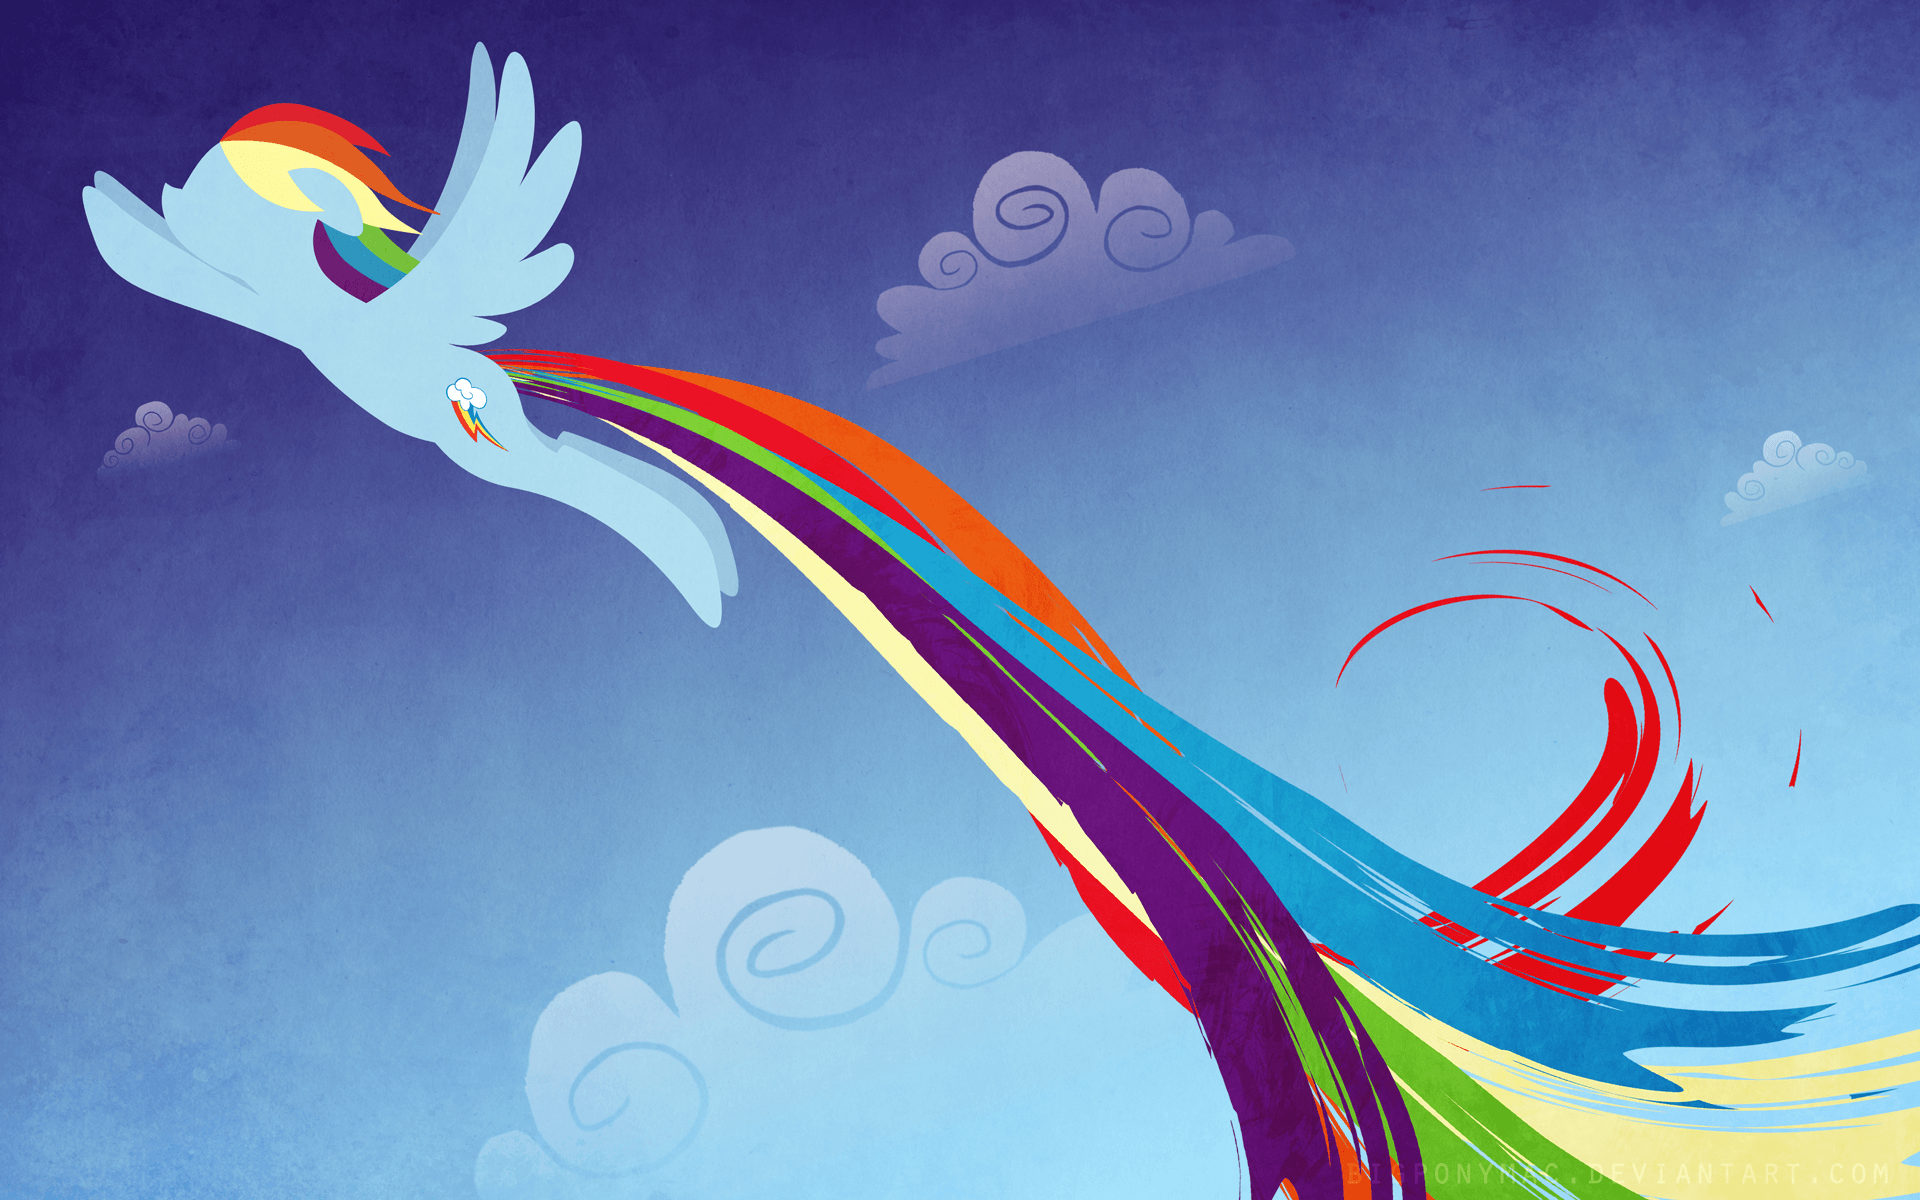 Rainbow Dash Wallpaper